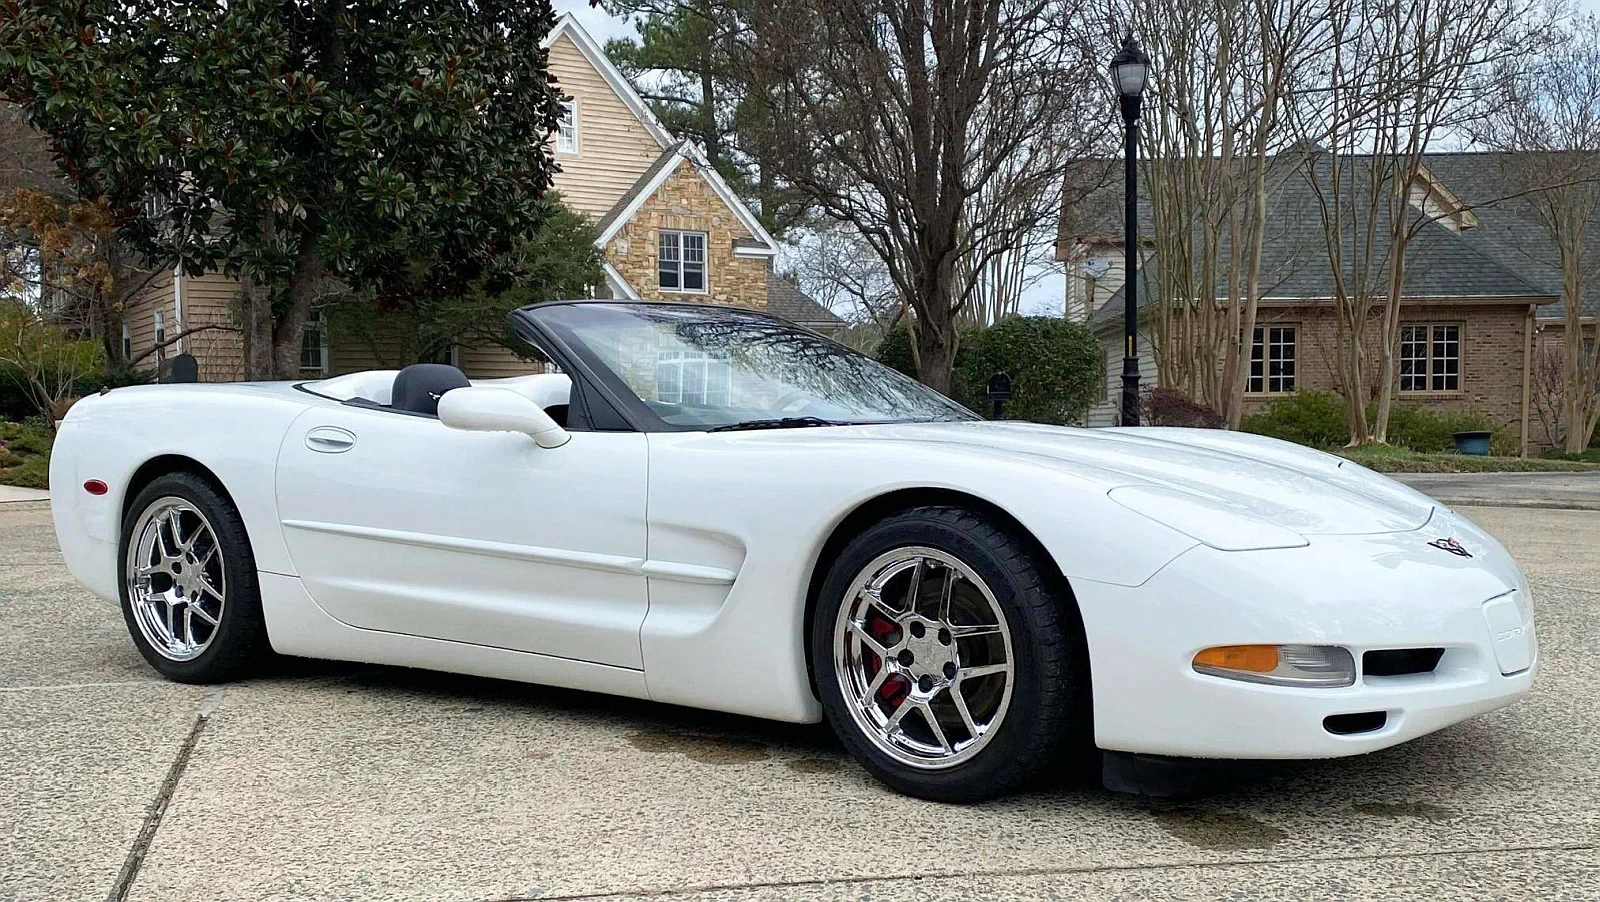 Corvette Generations/C5/C5 2000 White Right.webp